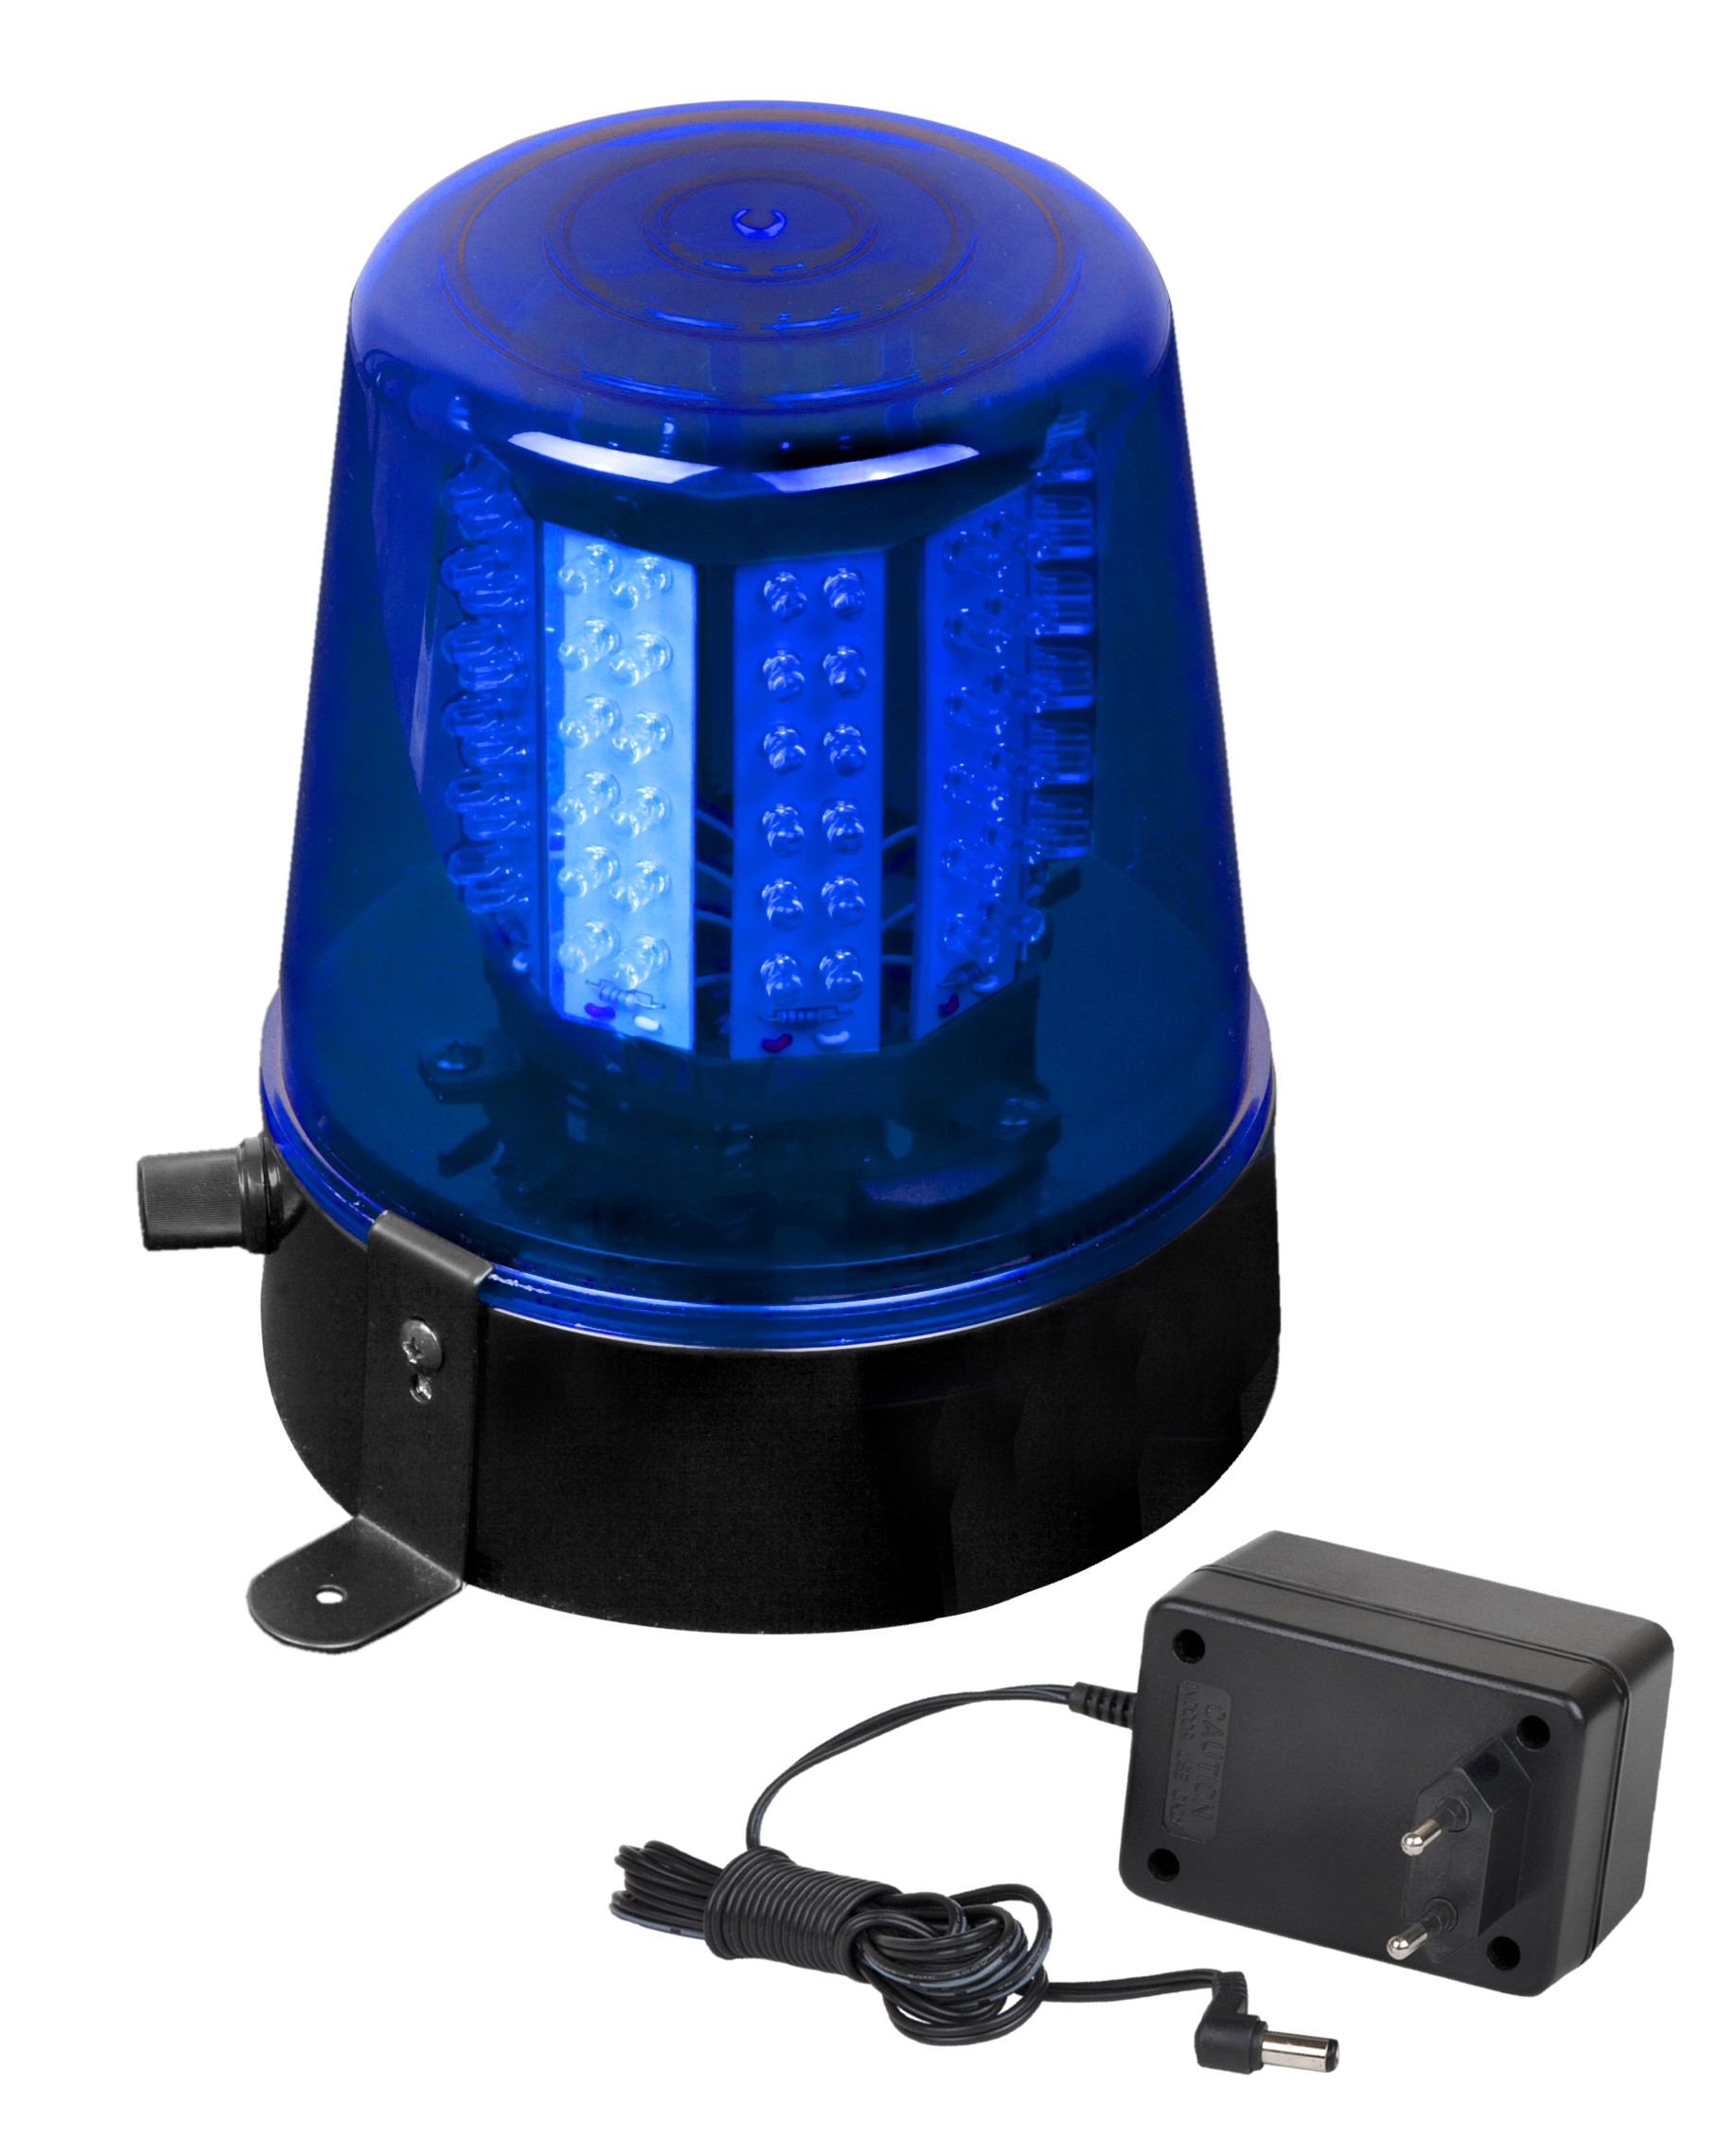 JB Systems - LED POLICE LIGHT BLUE - Effets de lumière Plug & Play